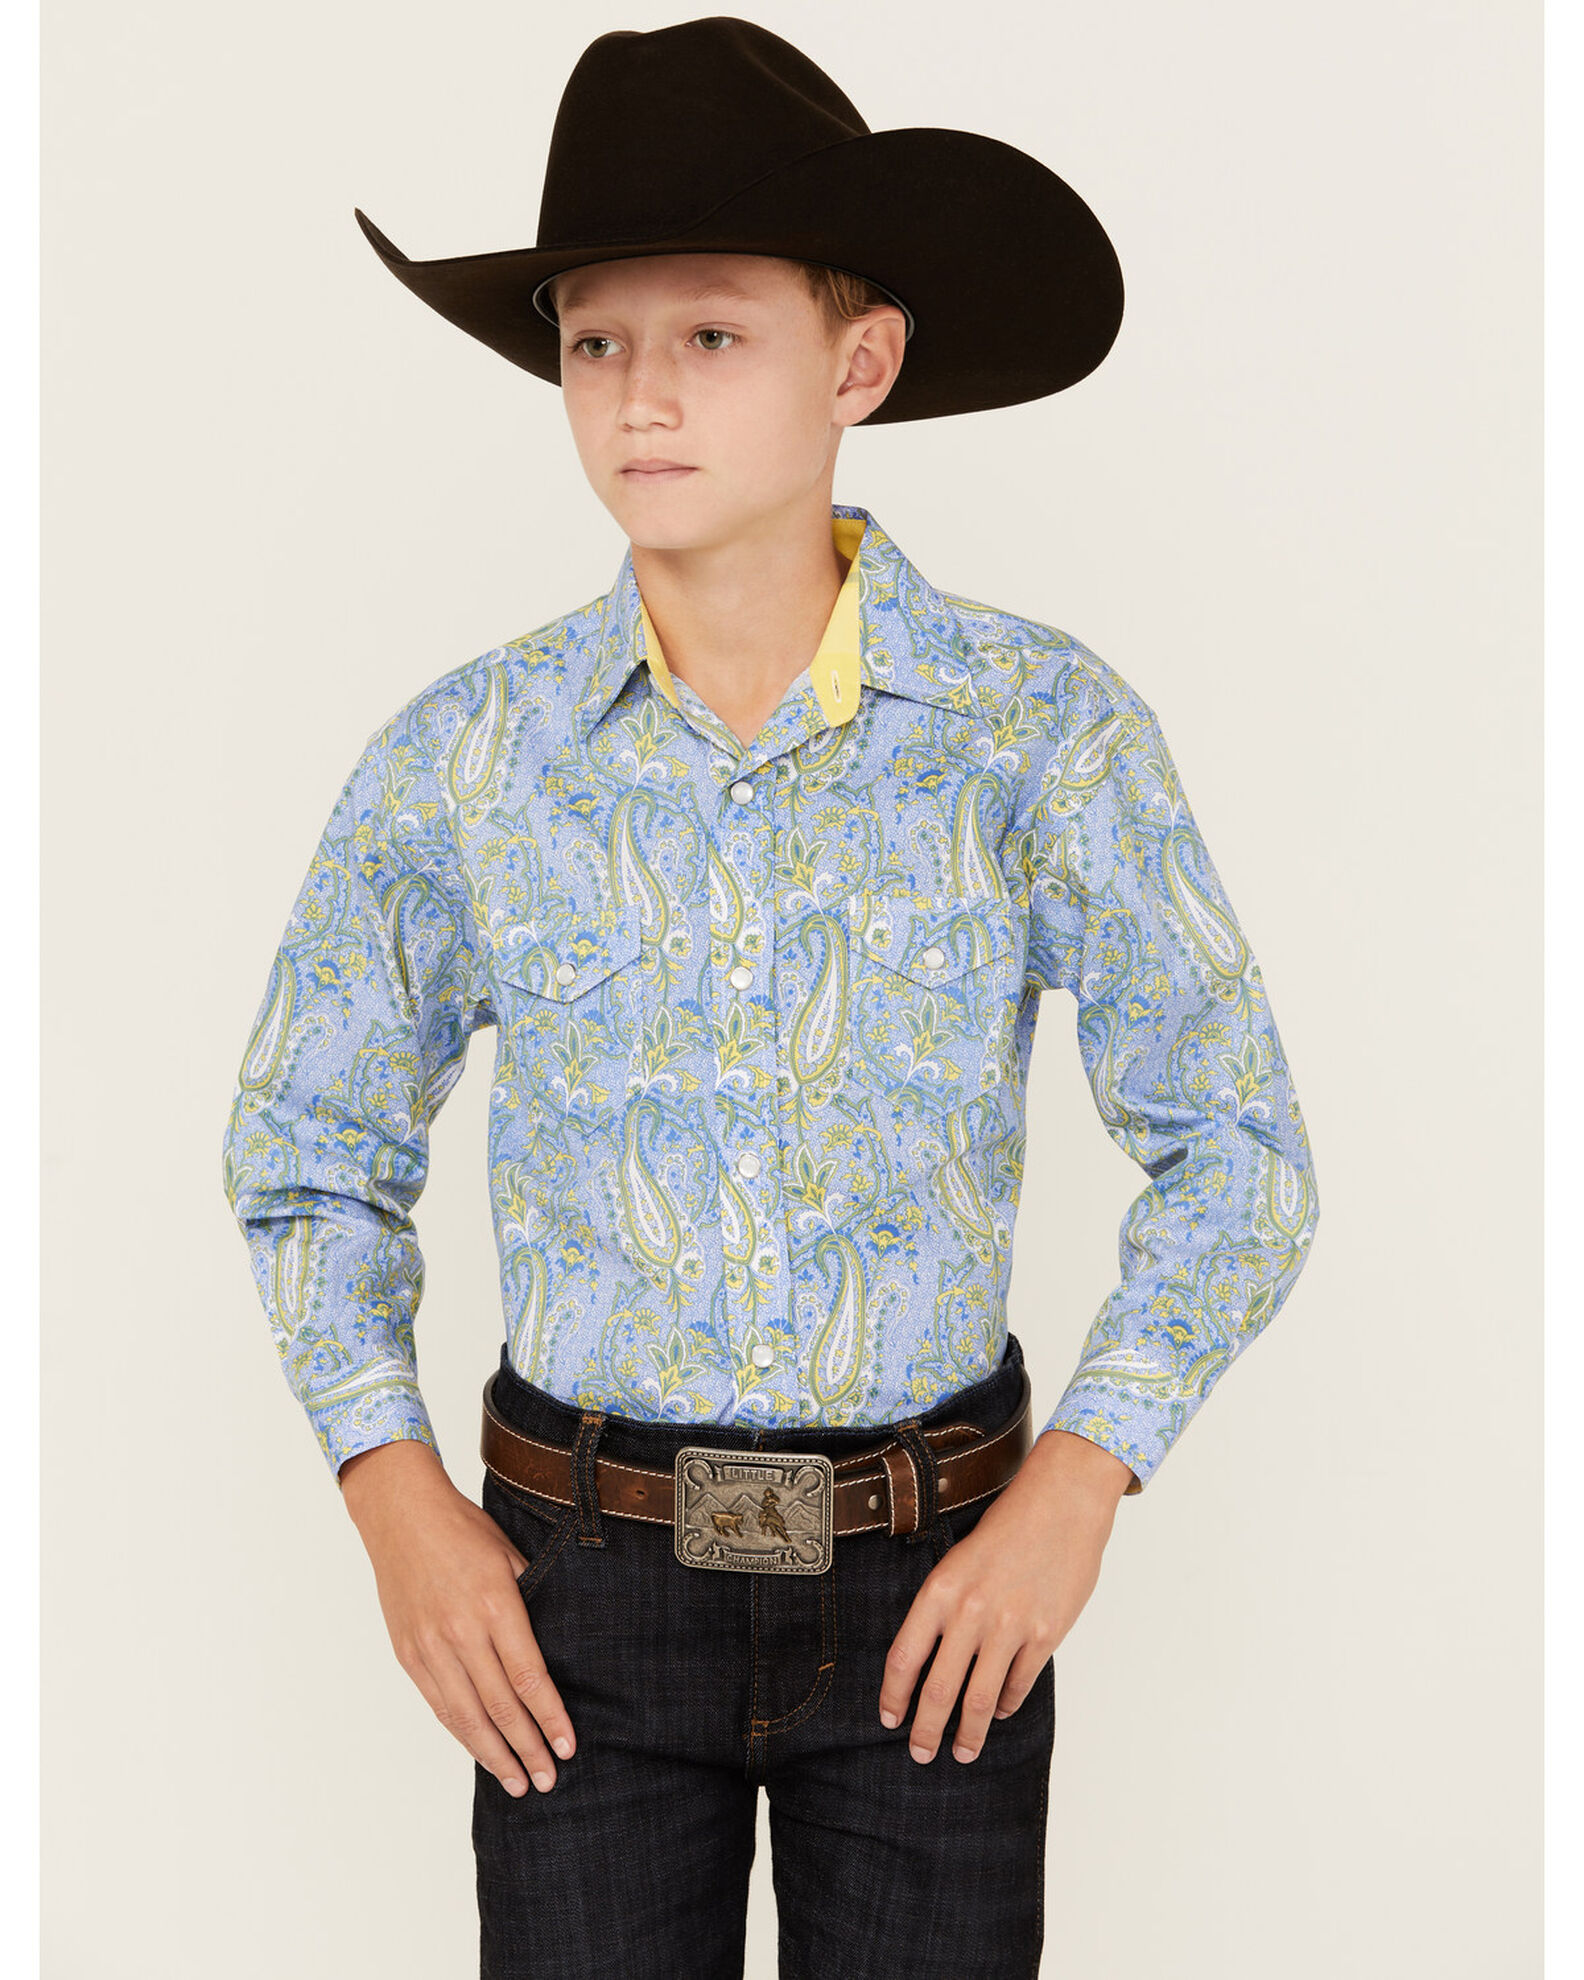 Panhandle Select Boys' Paisley Print Long Sleeve Snap Western Shirt